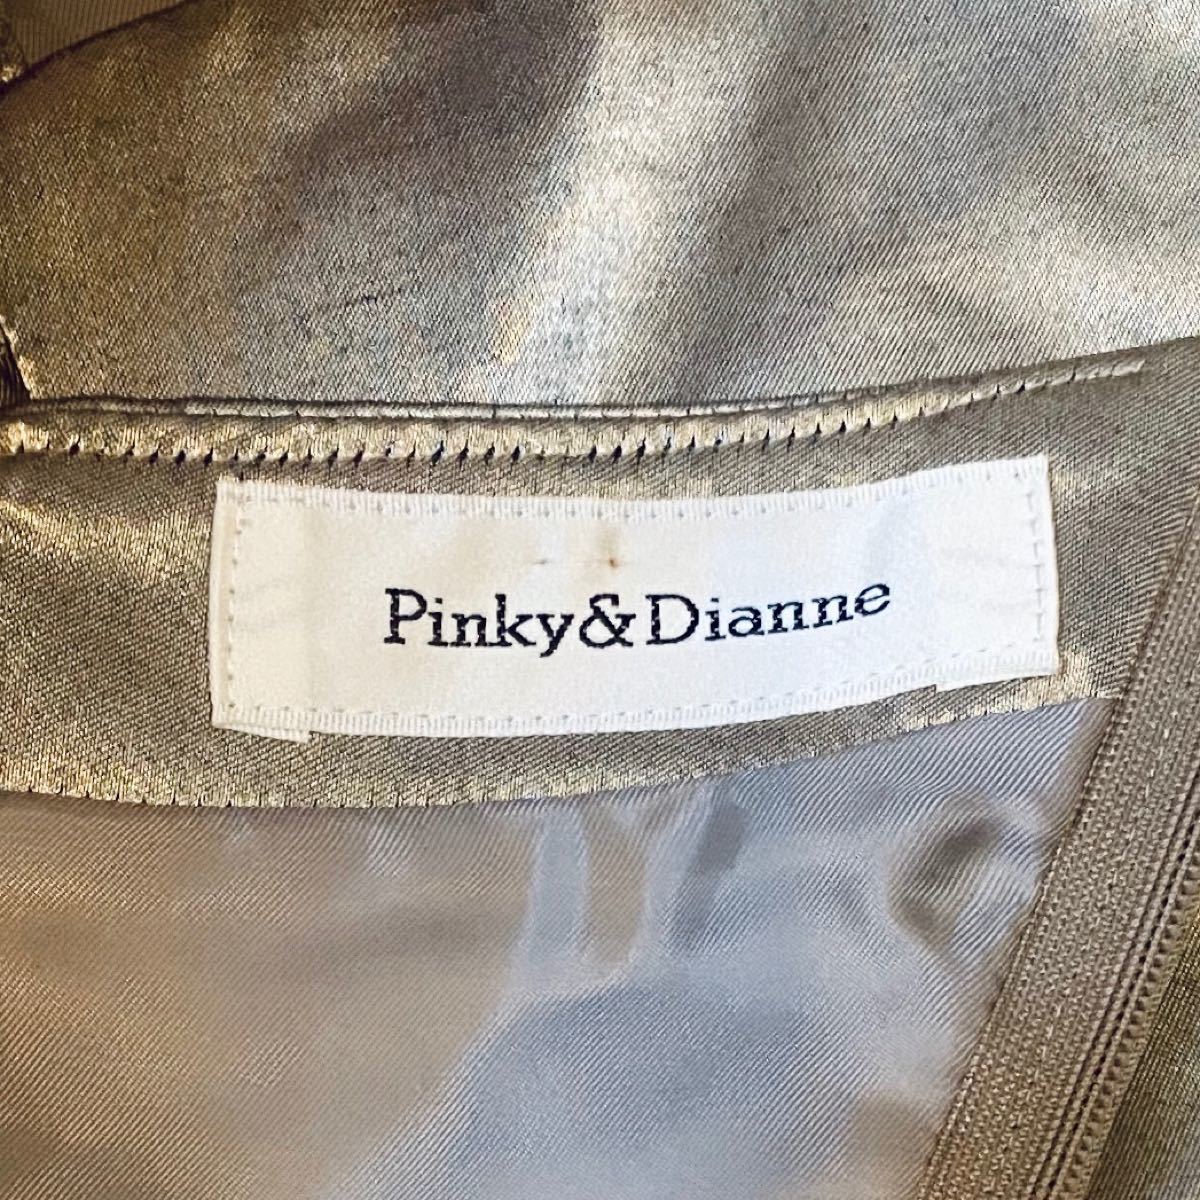 Pinky&dianne ブラトップ 日本製 キャミ パーティー ドレス チューブトップ